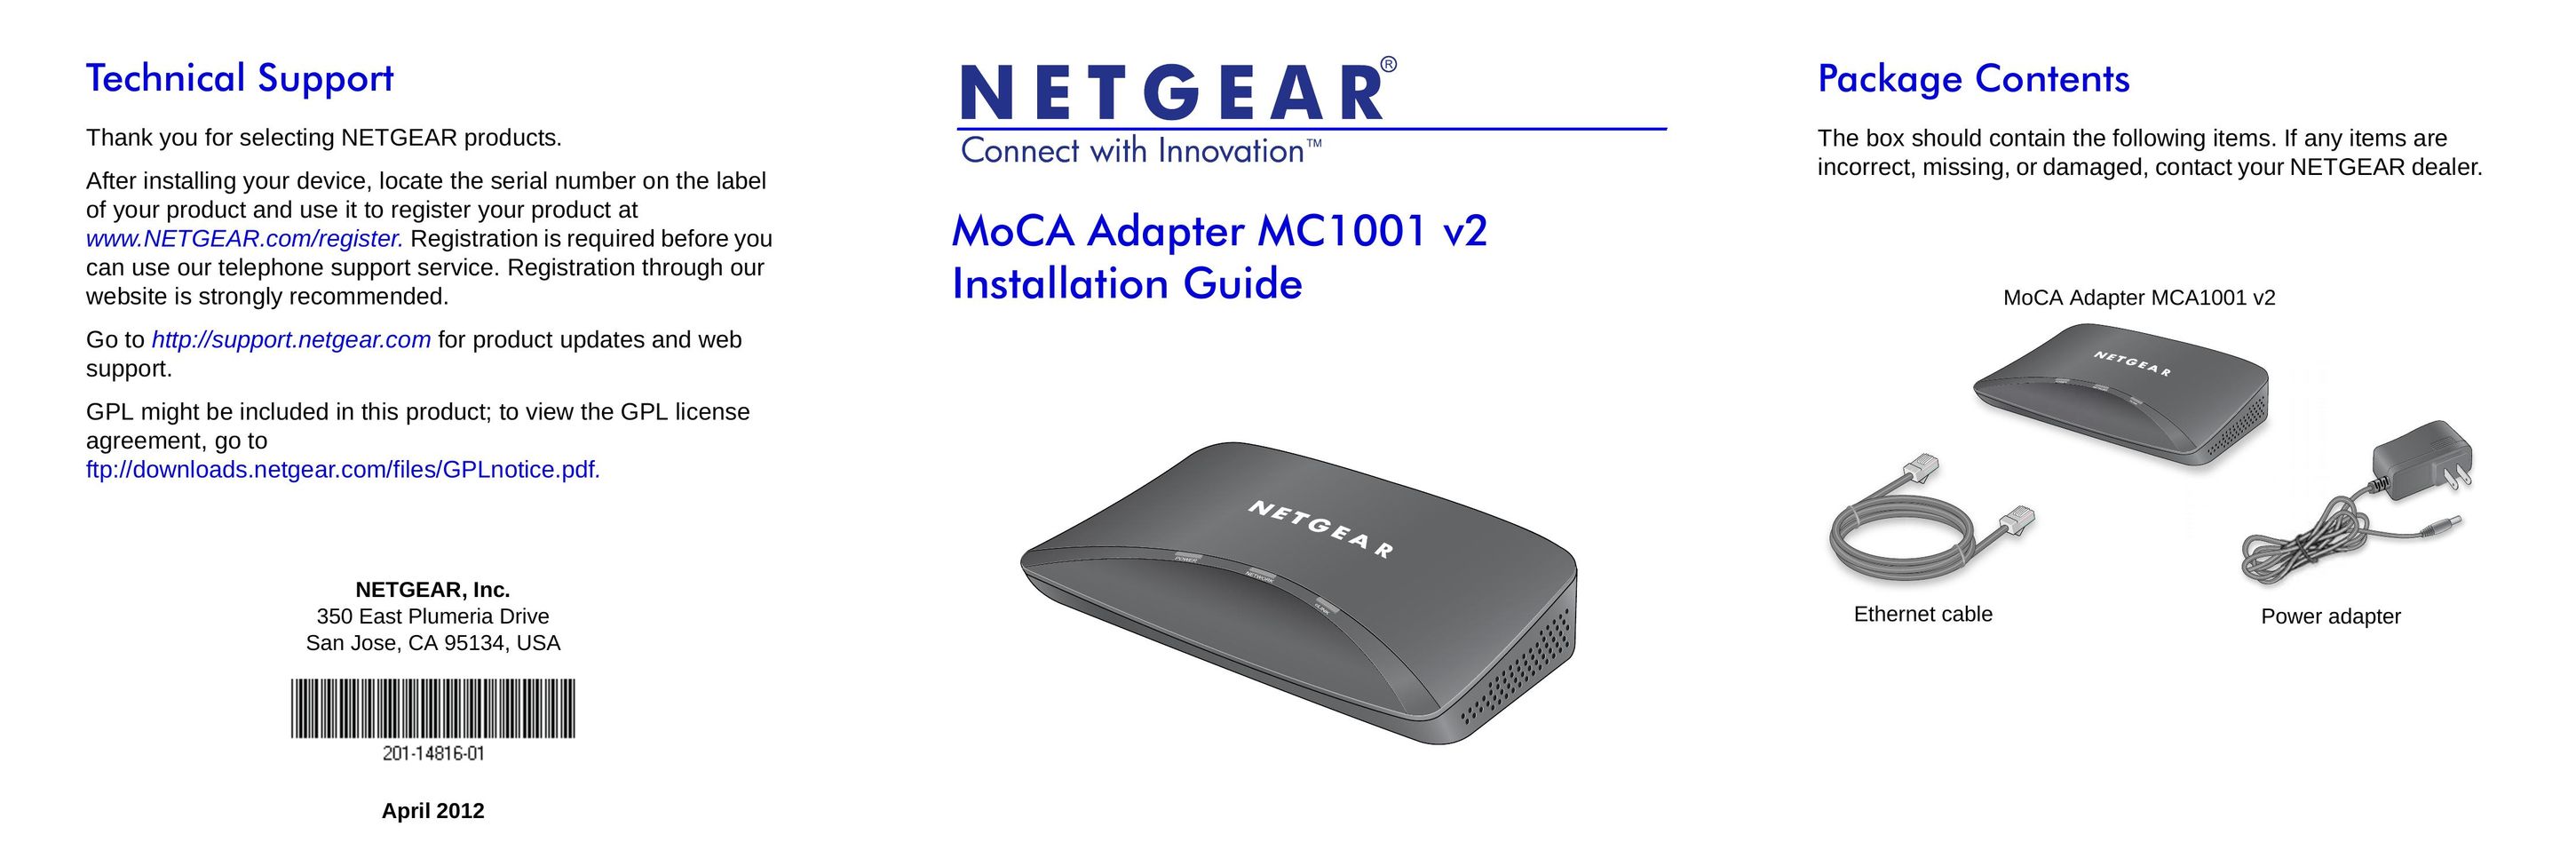 NETGEAR MC1101y2 MP3 Player Accessories User Manual